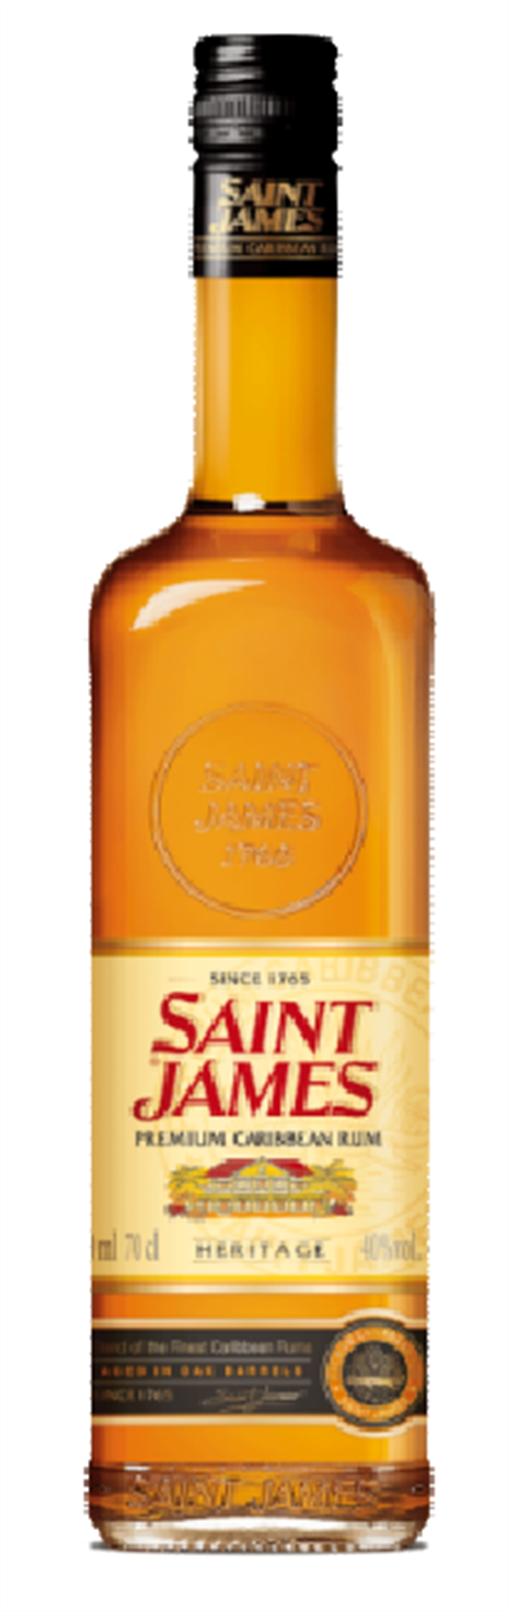 聖詹姆士金蘭姆酒0.7L SAINT JAMES HERITAGE RUM0.7L